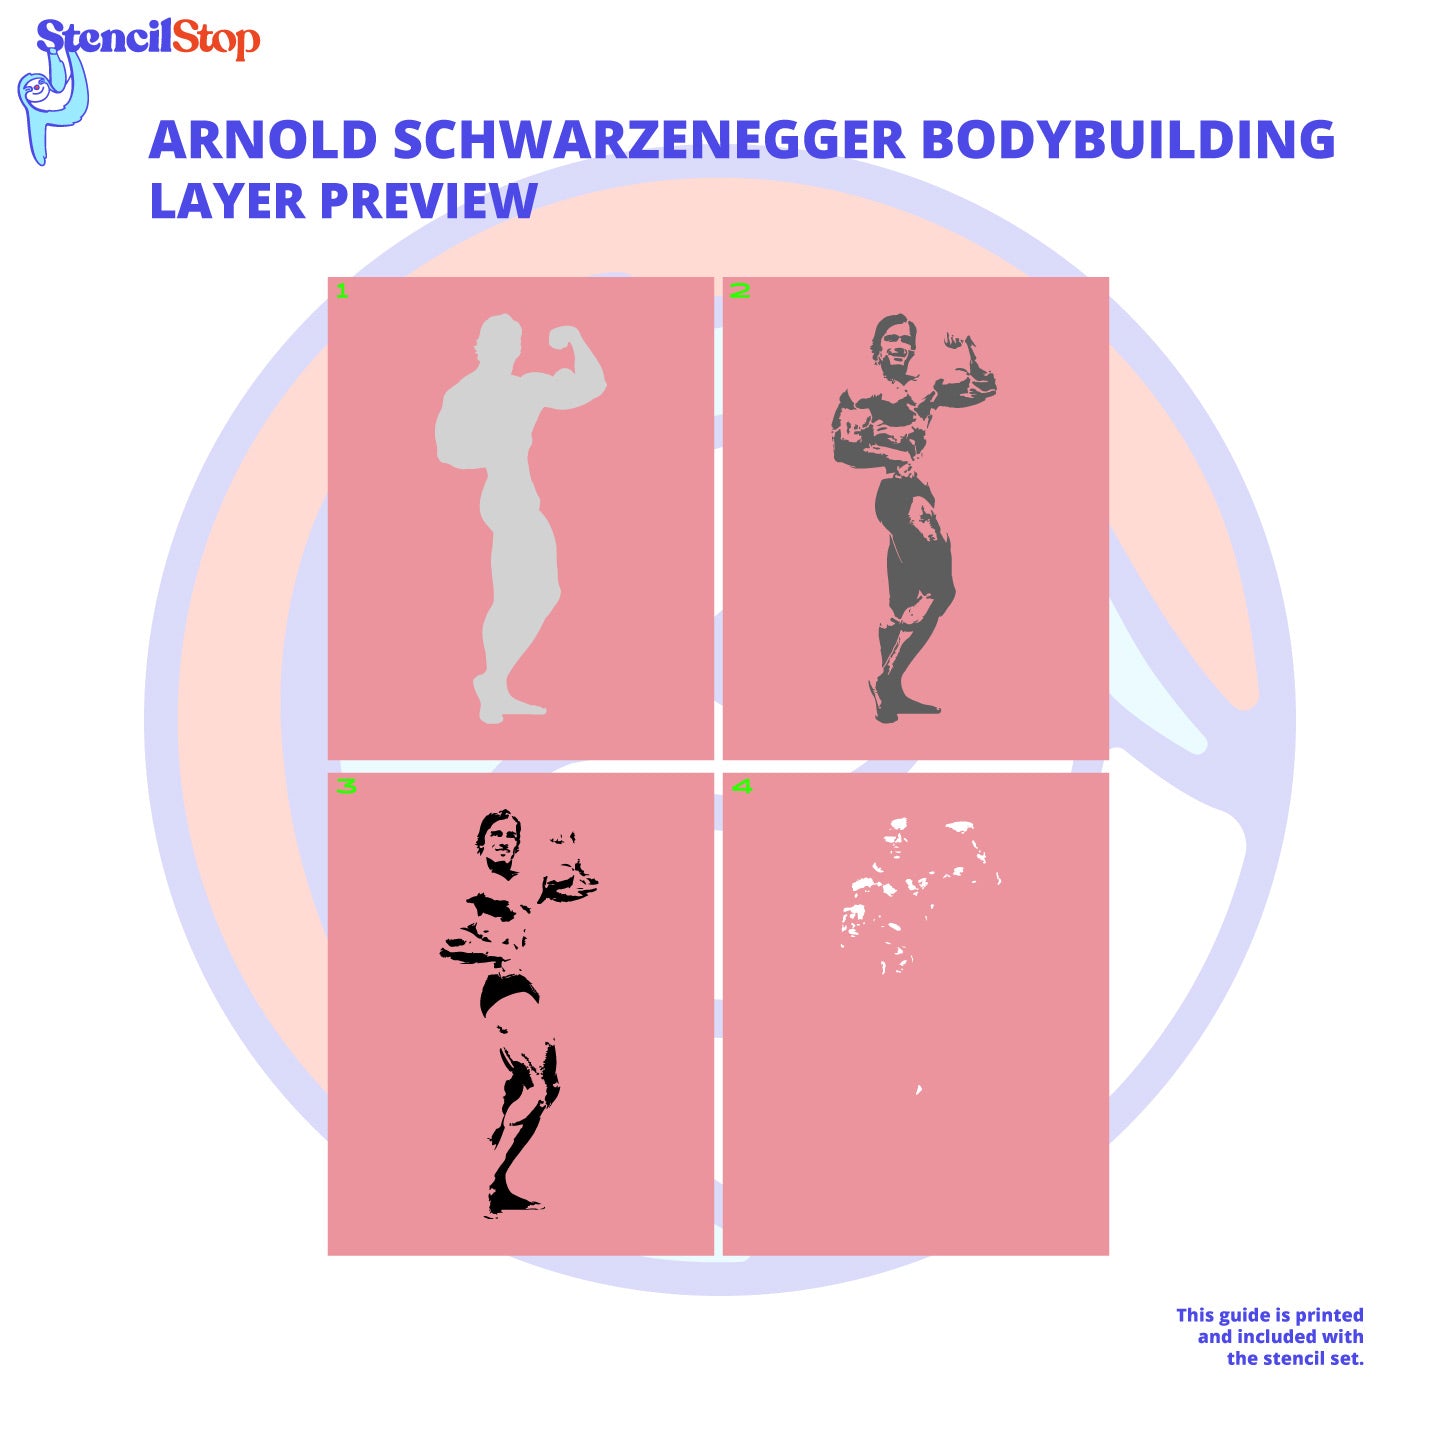 Arnold Schwarzenegger "Bodybuilding" Layered Stencil Preview 